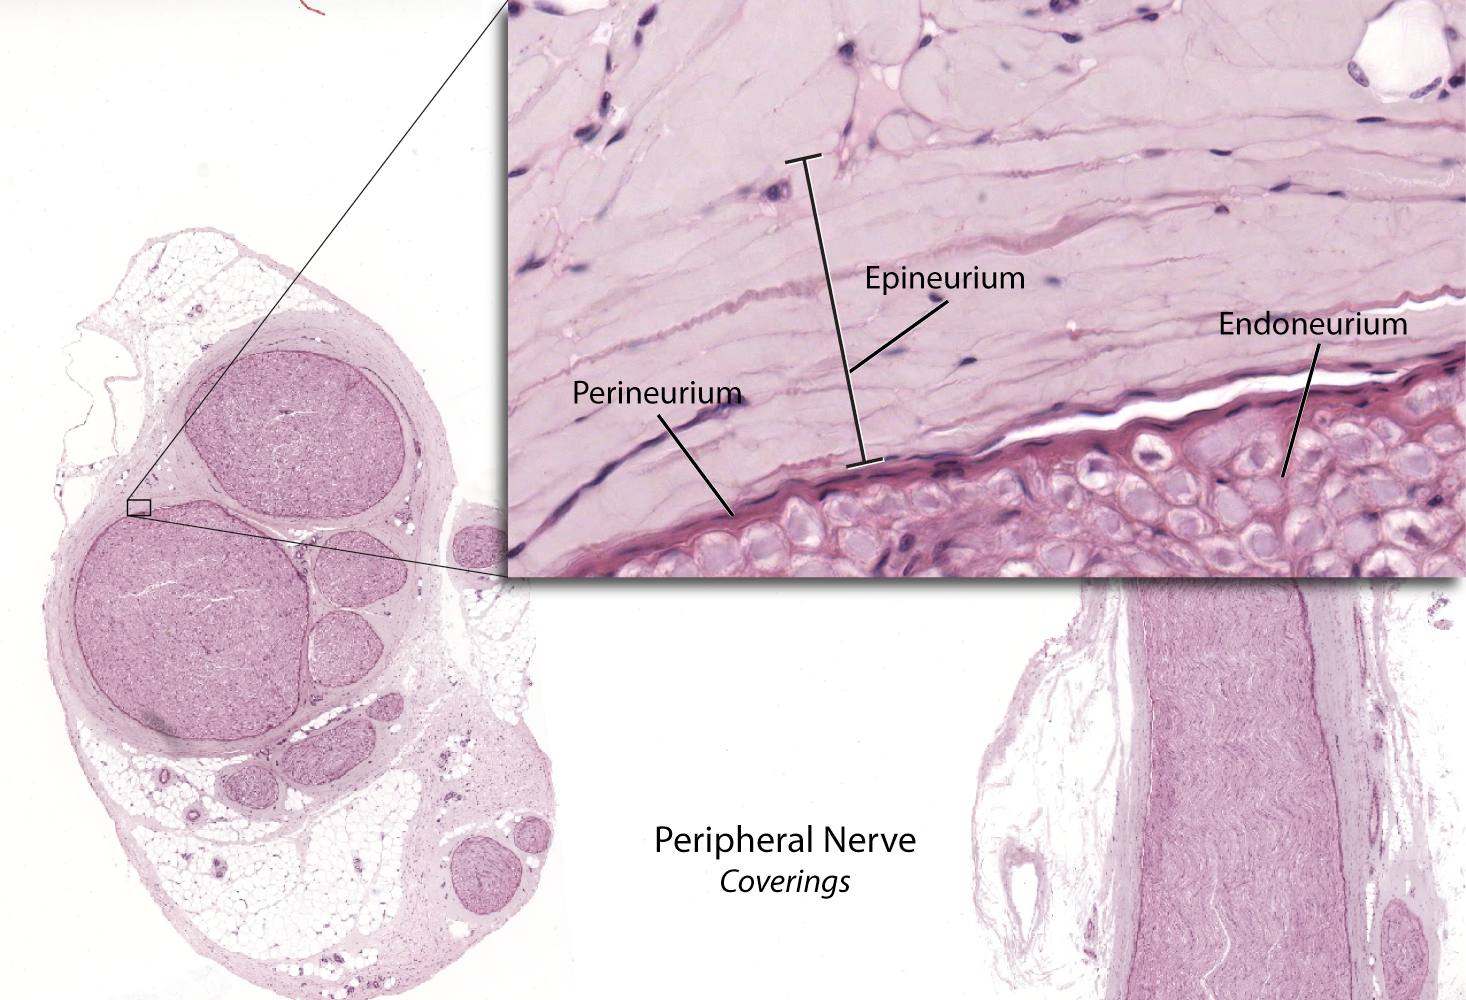 nerve fiber with schwann cell cross section